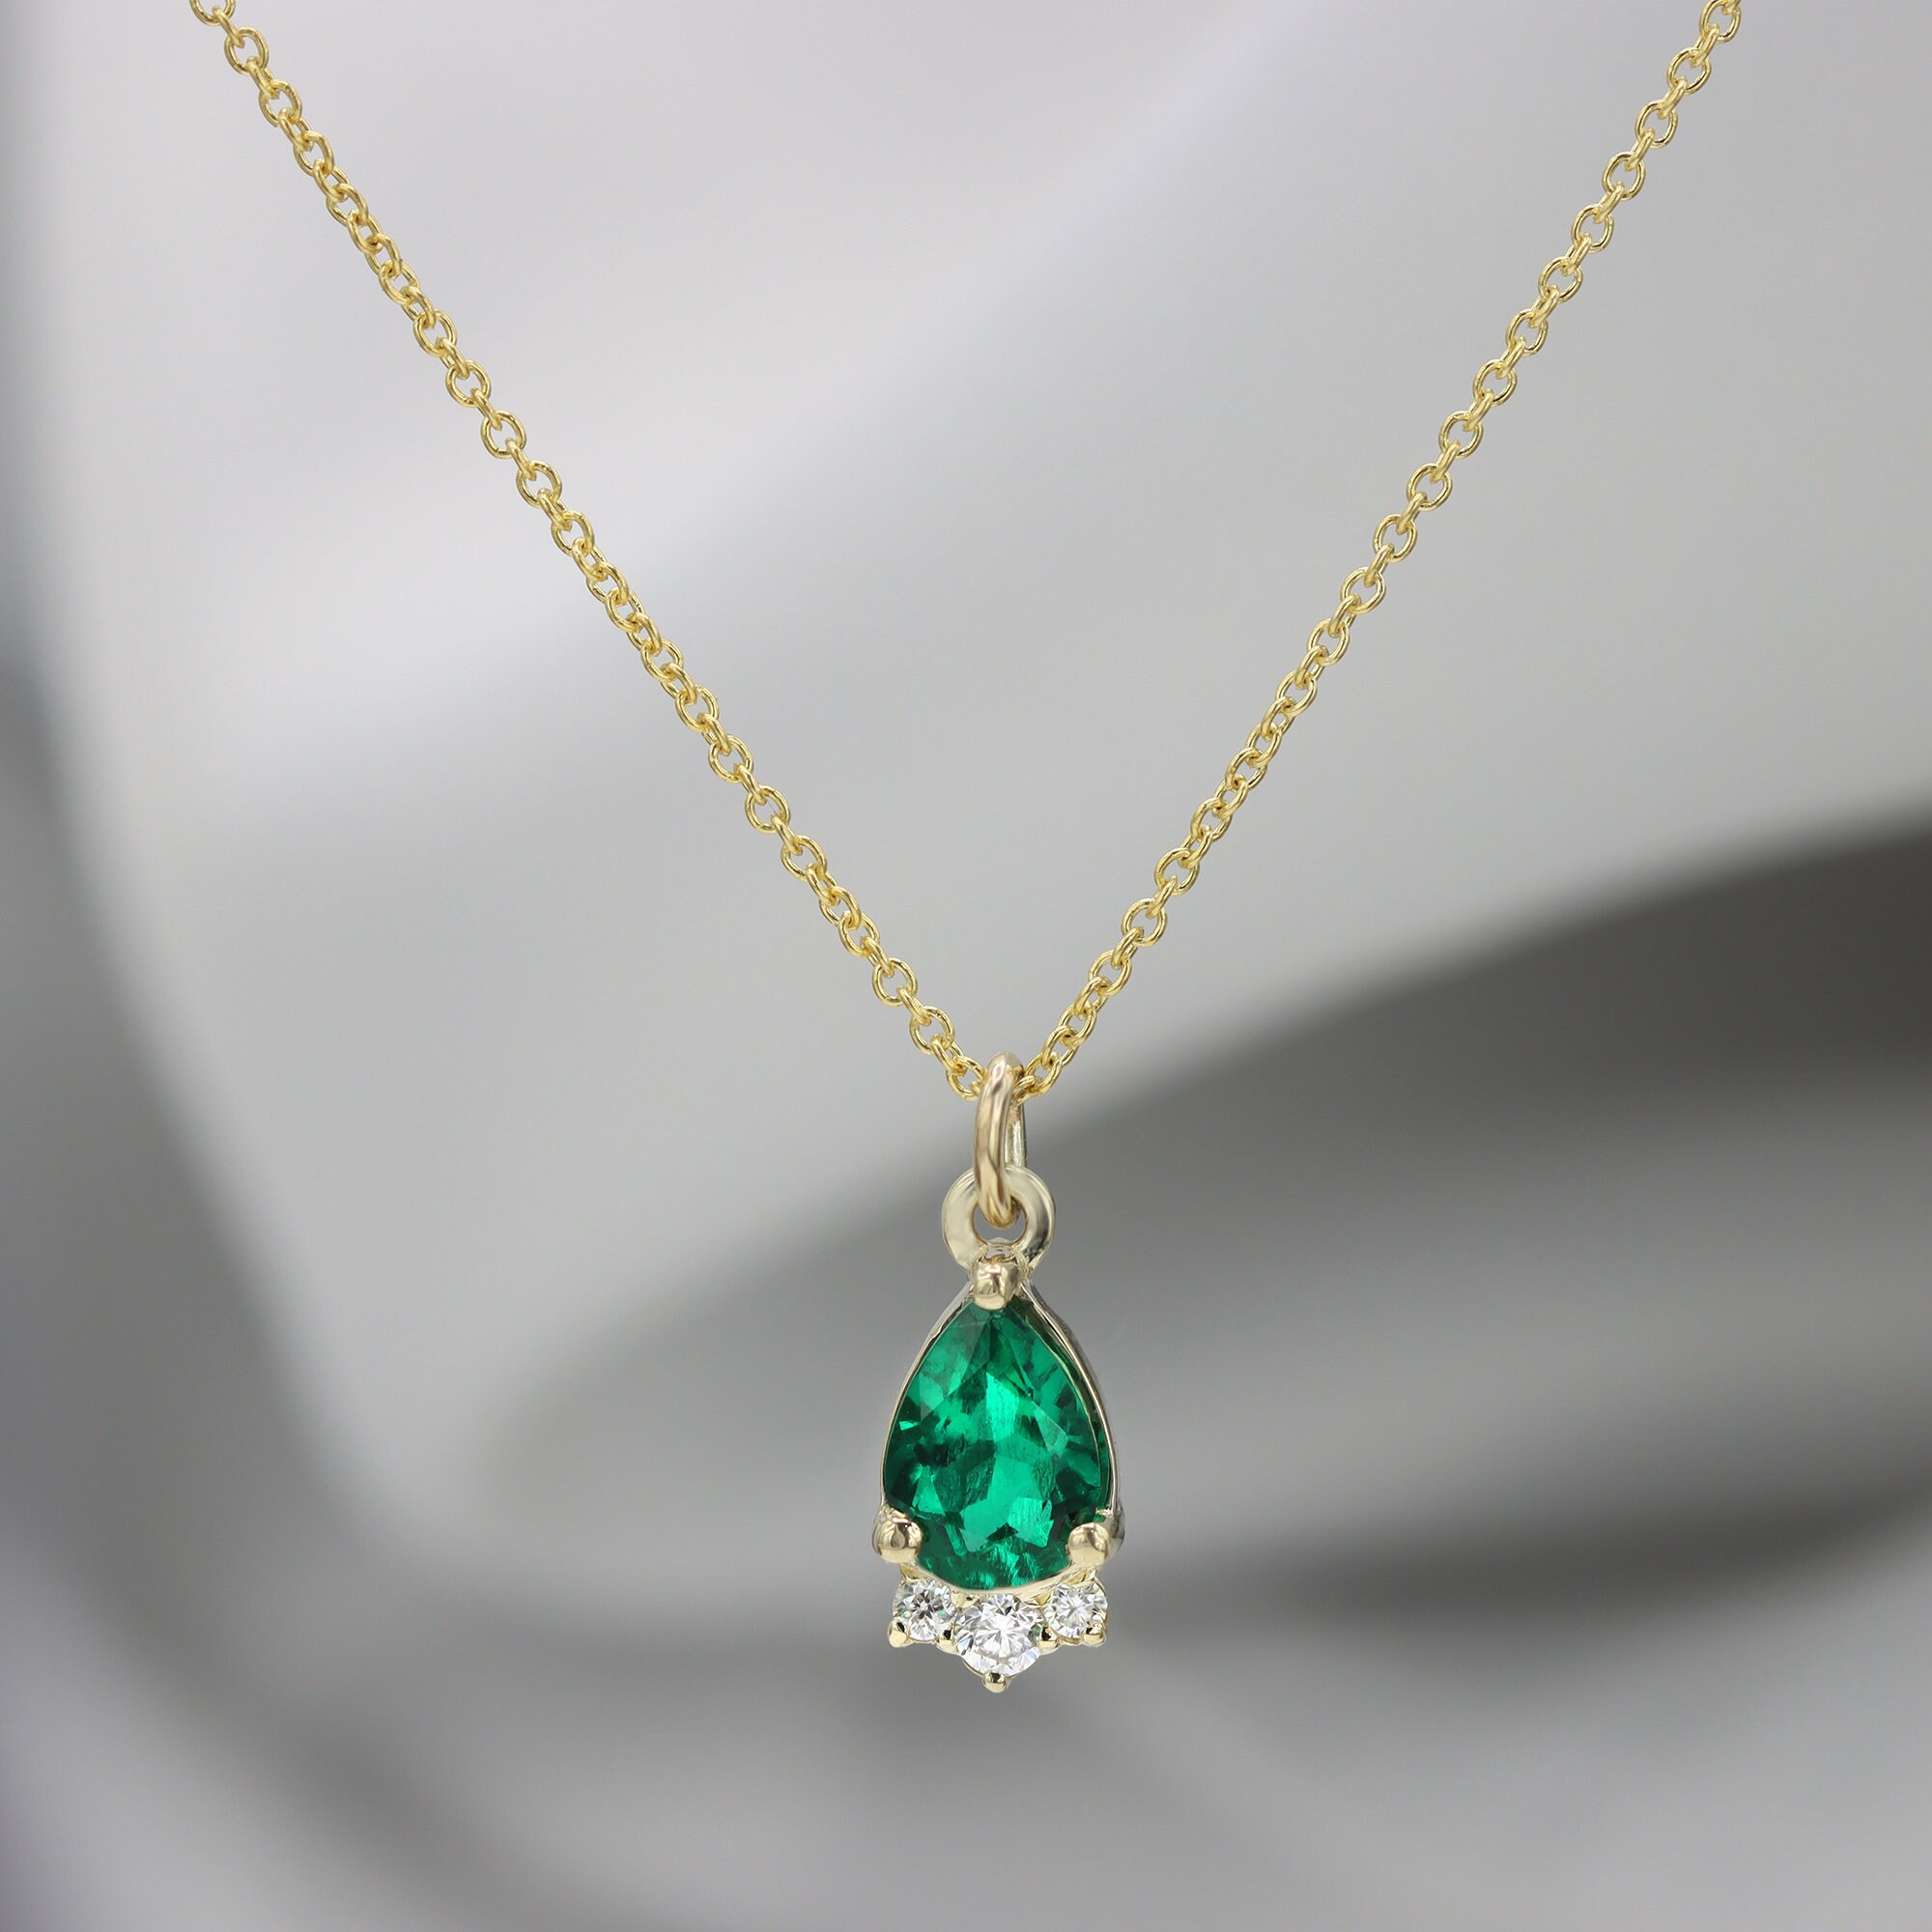 Pear shaped emerald pendant necklace Diamonds pear emerald | Etsy